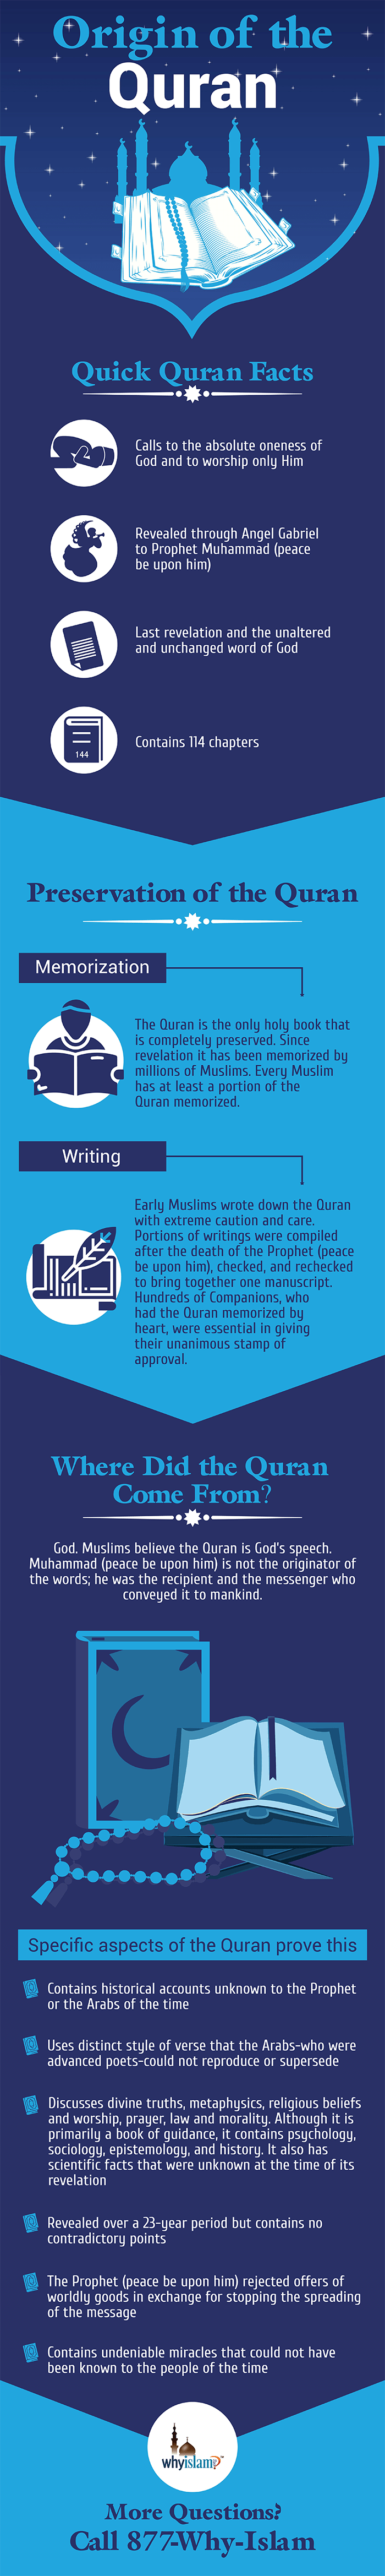 Worship in Islam Infographic